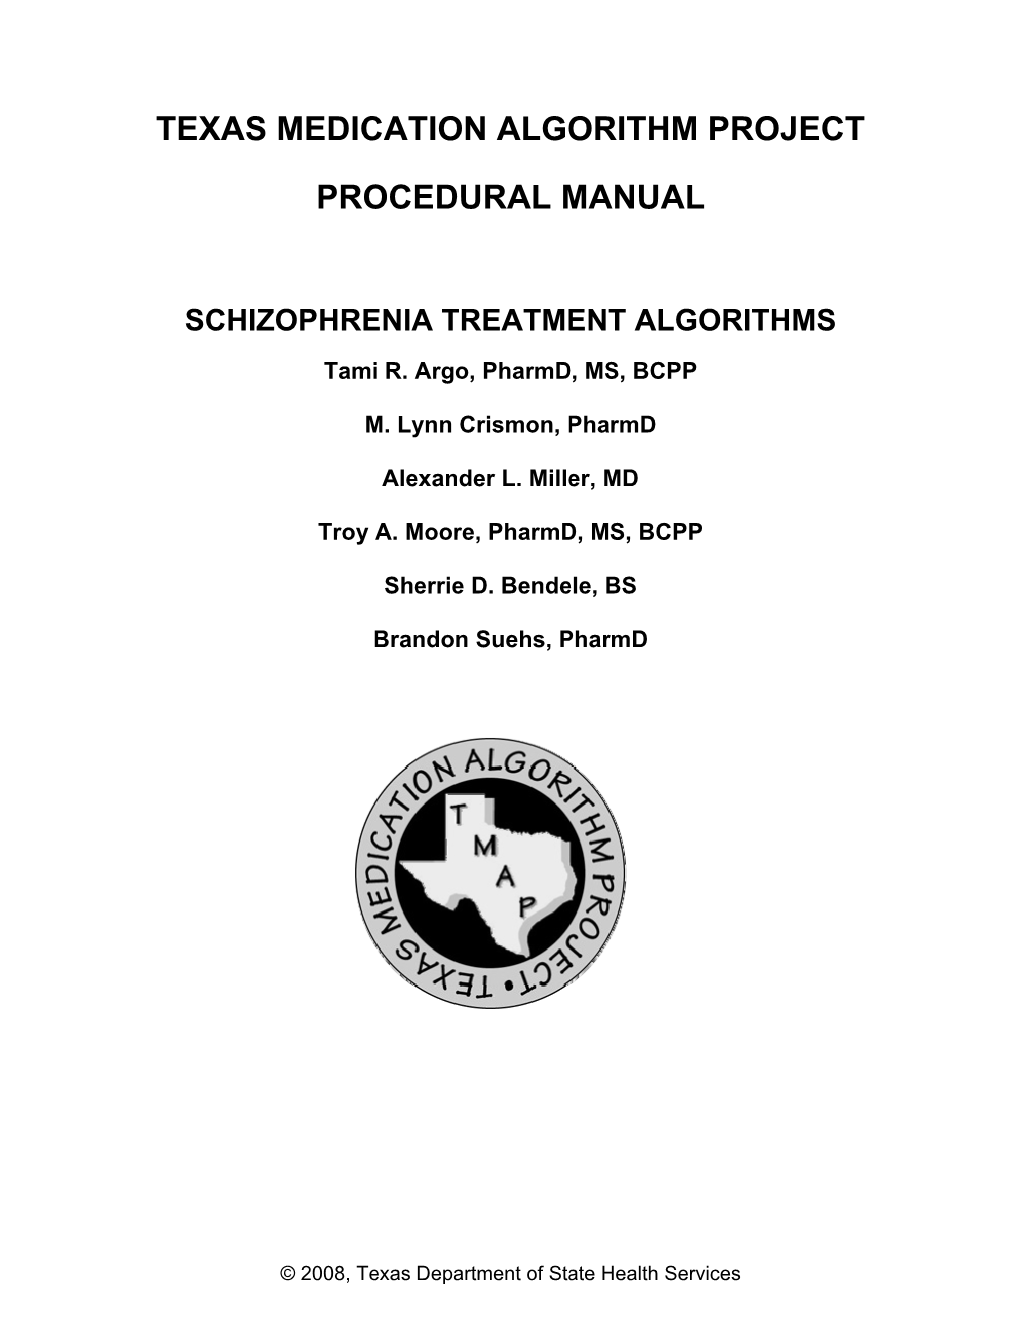 Texas Medication Algorithm Project Procedural Manual: Schizophrenia Algorithm